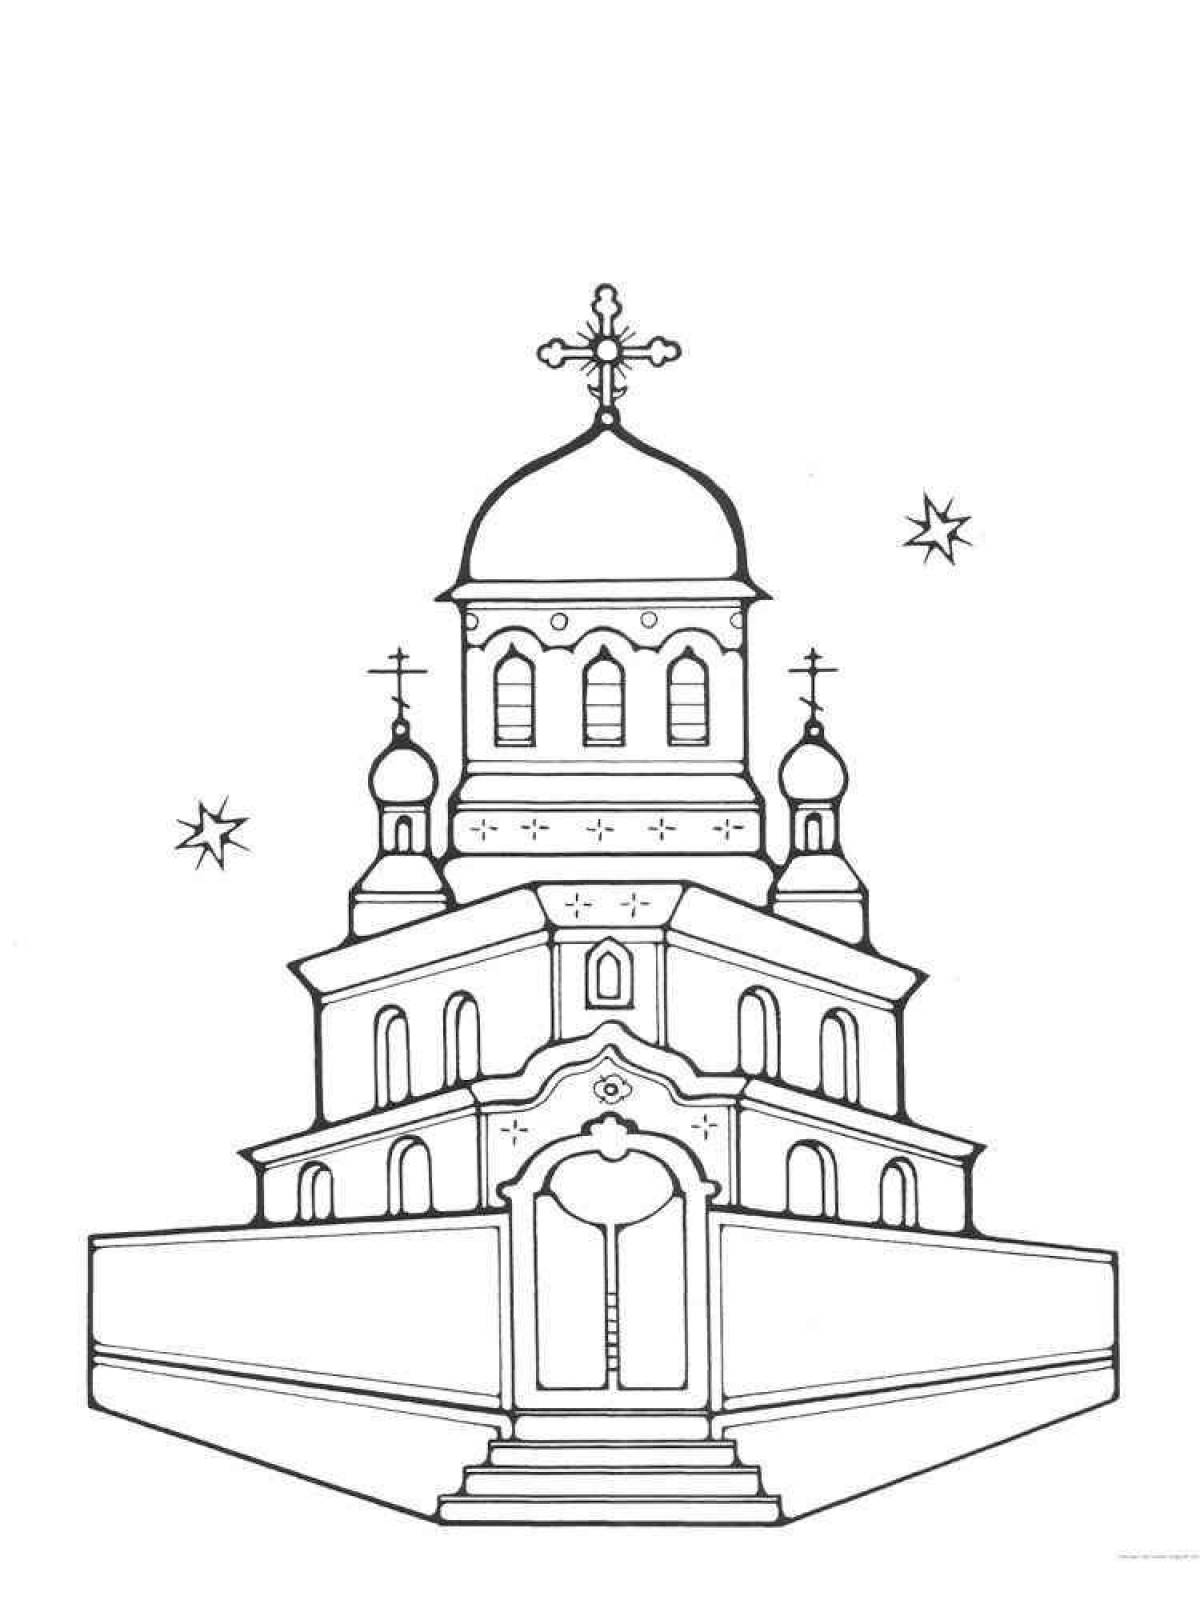 A majestic church drawing